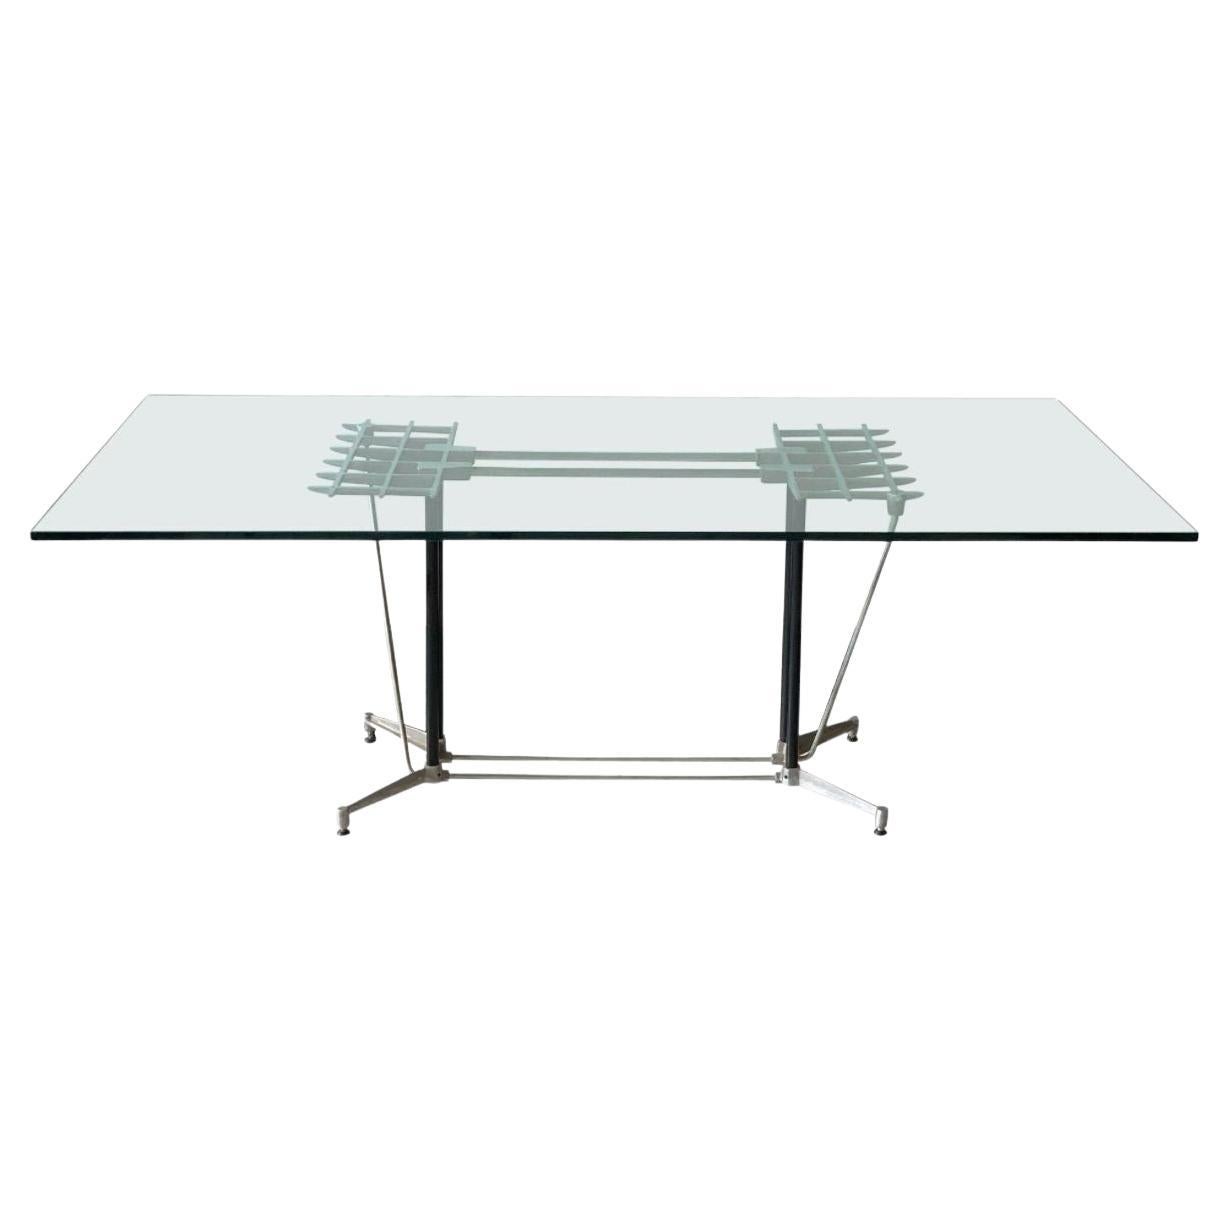 Postmodern Industrial Dining Table Designed by Robert Josten